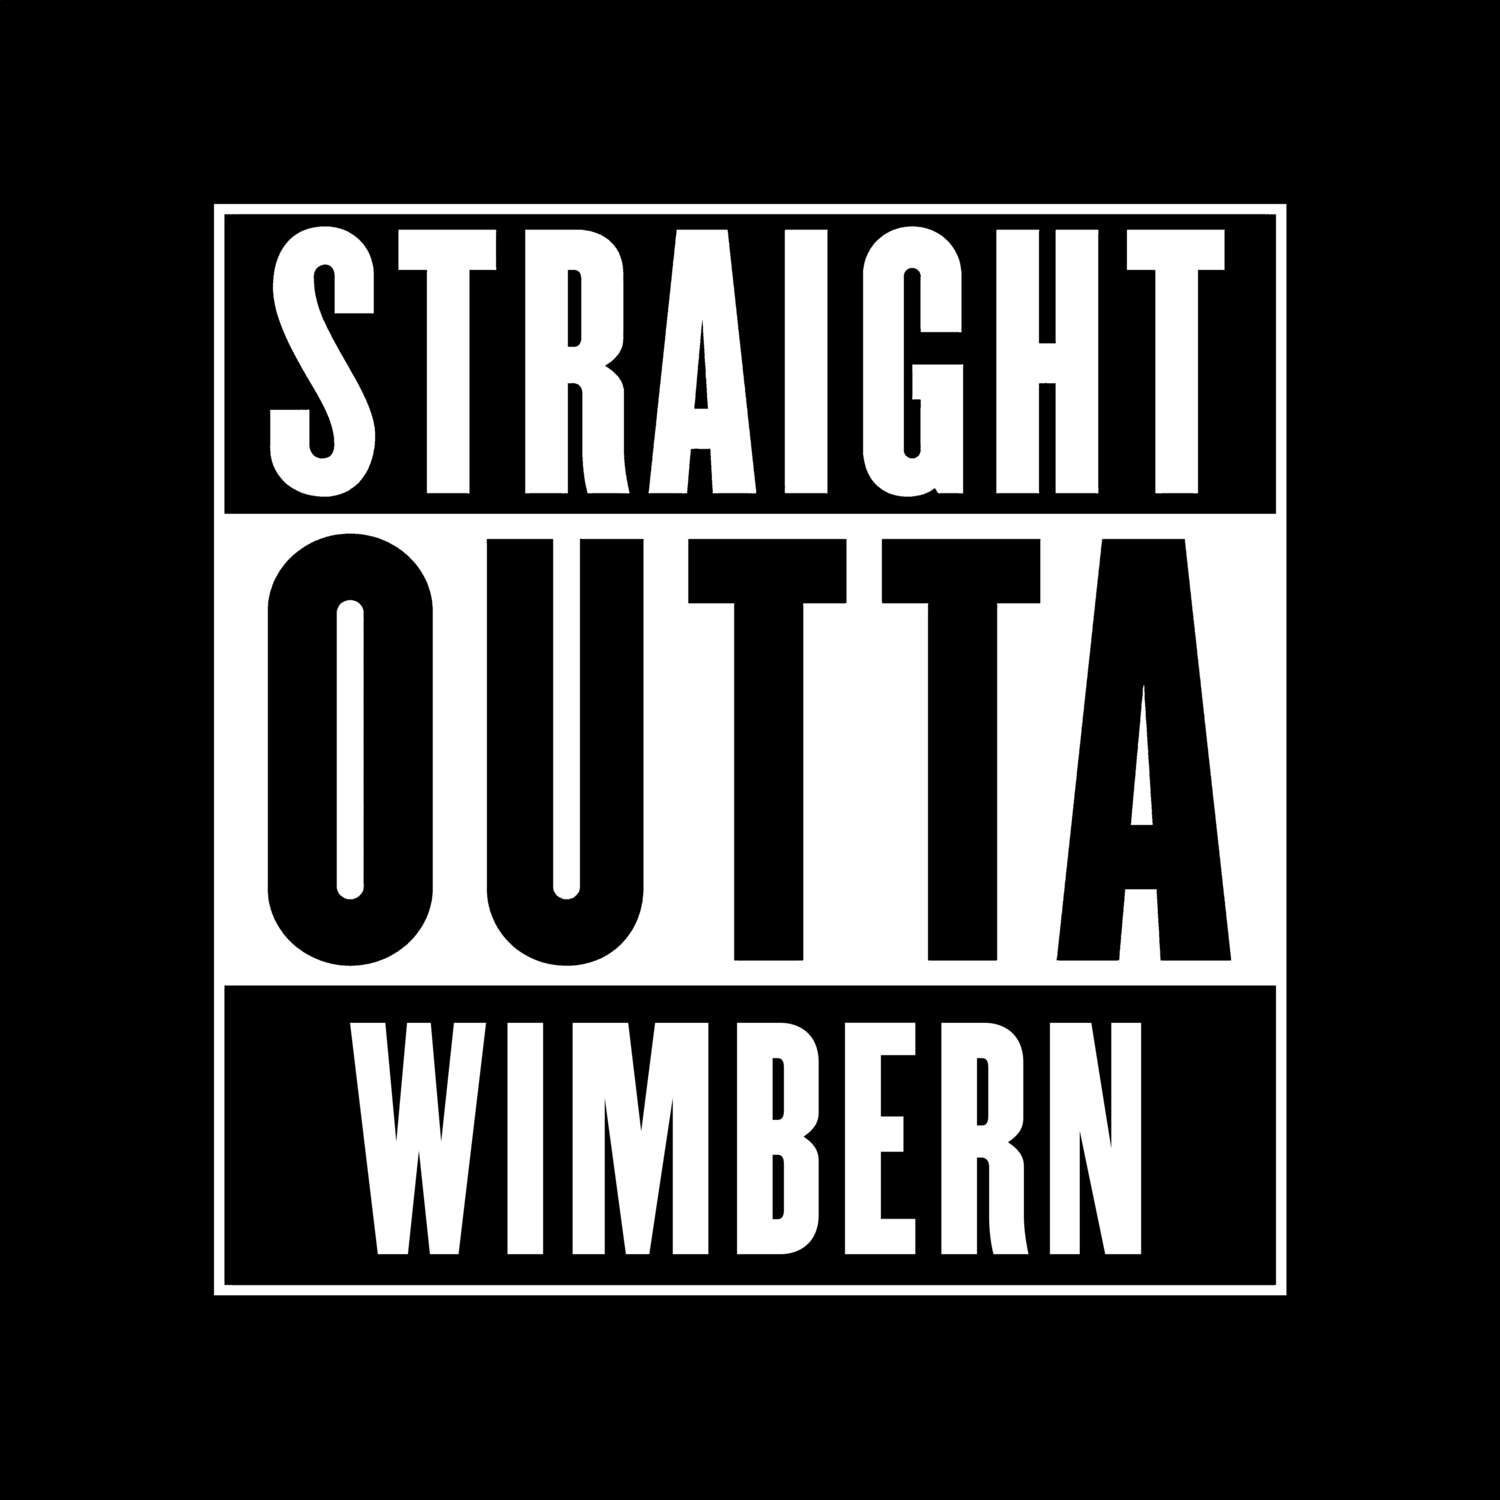 Wimbern T-Shirt »Straight Outta«